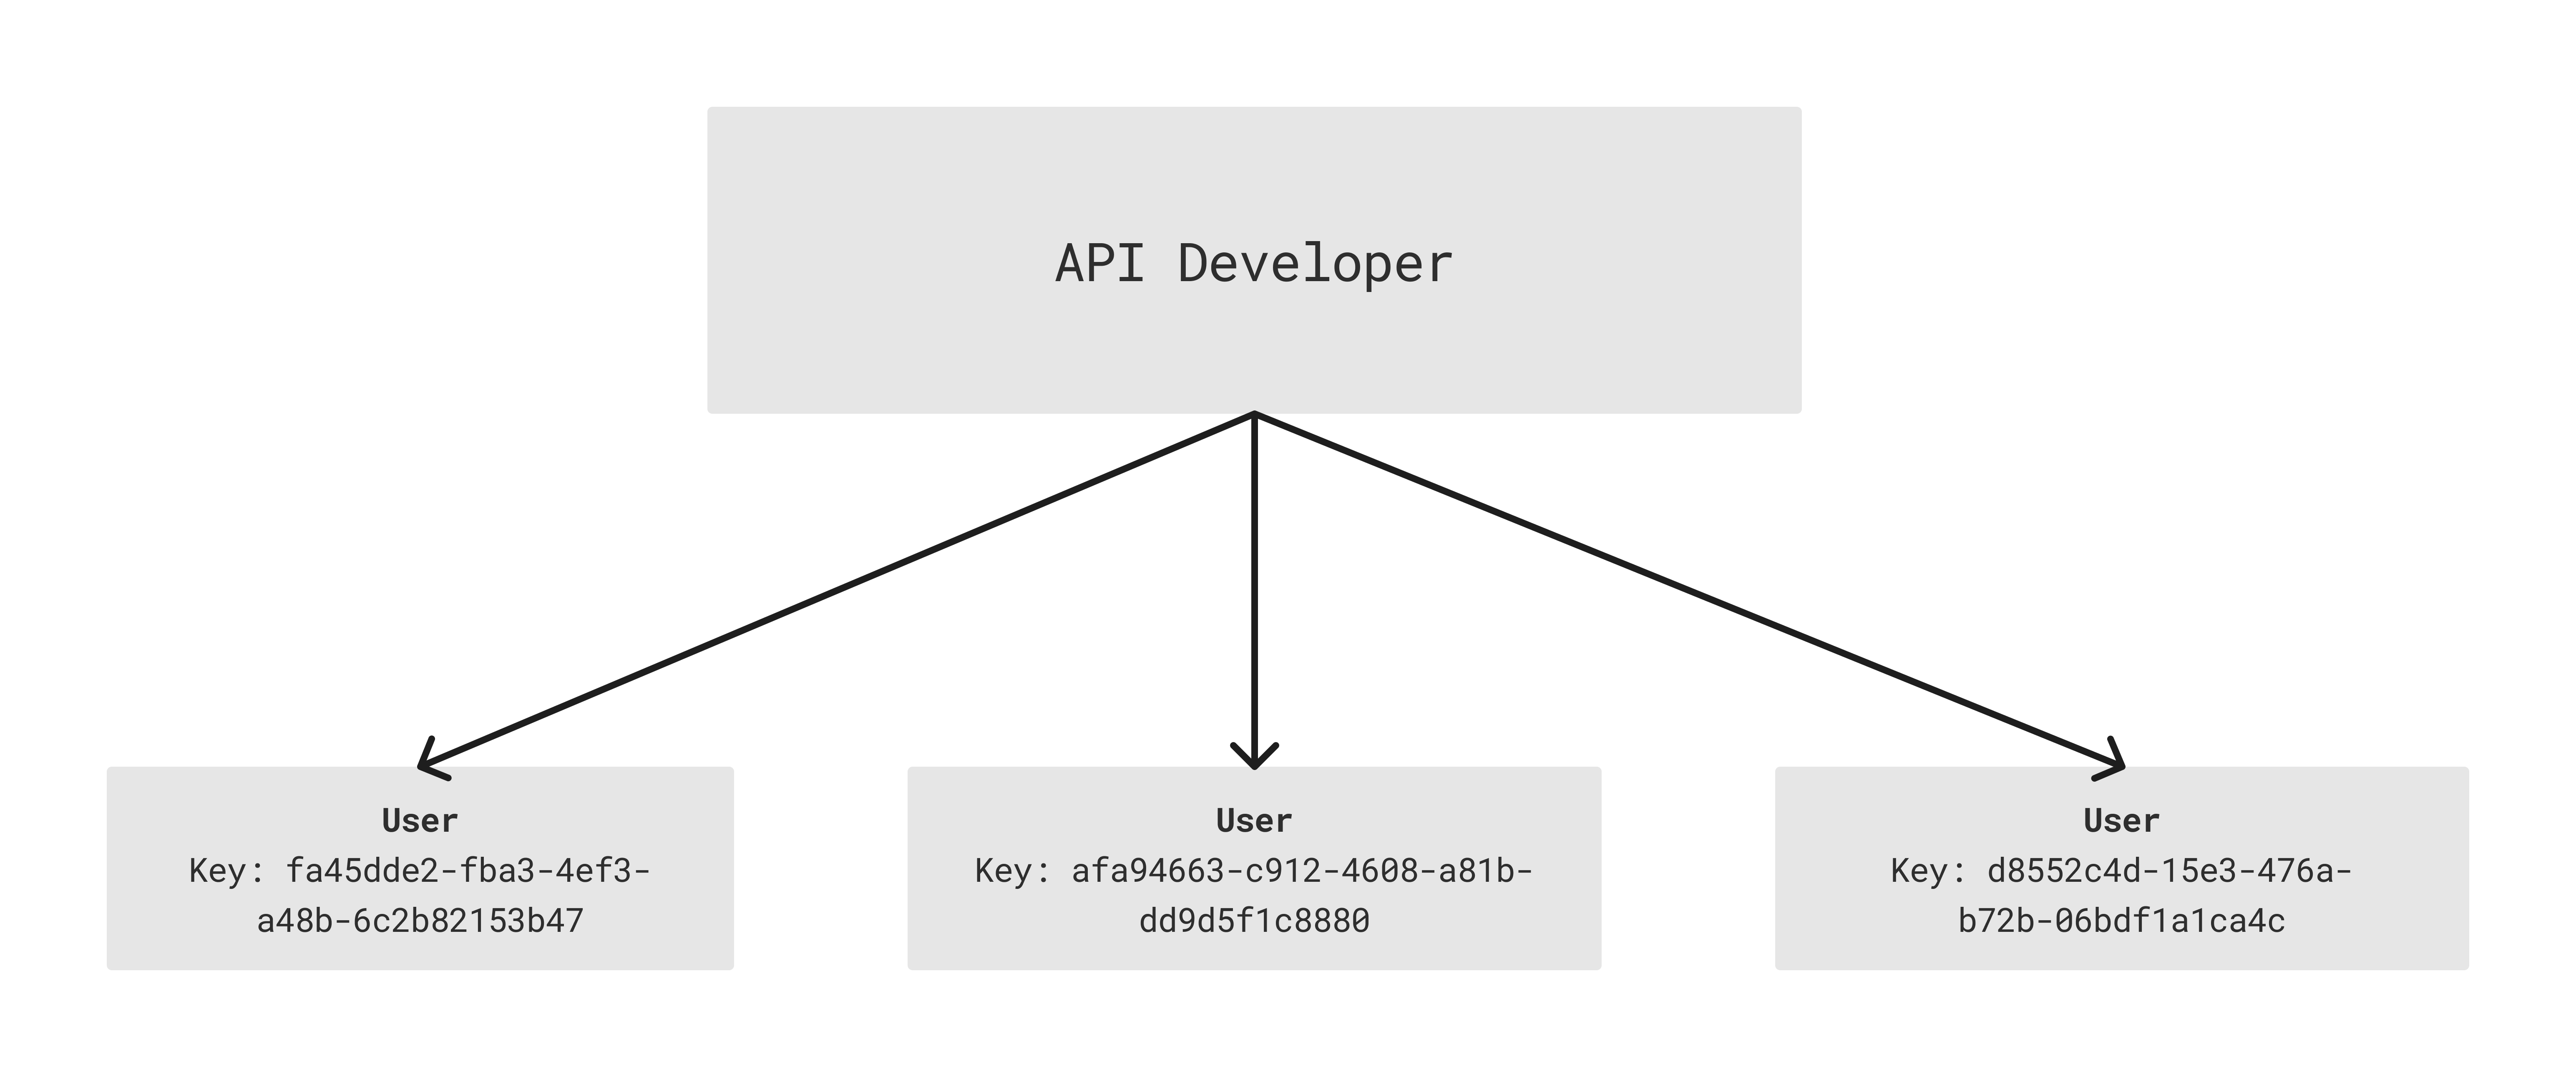 the api developer hands out keys to each unique user